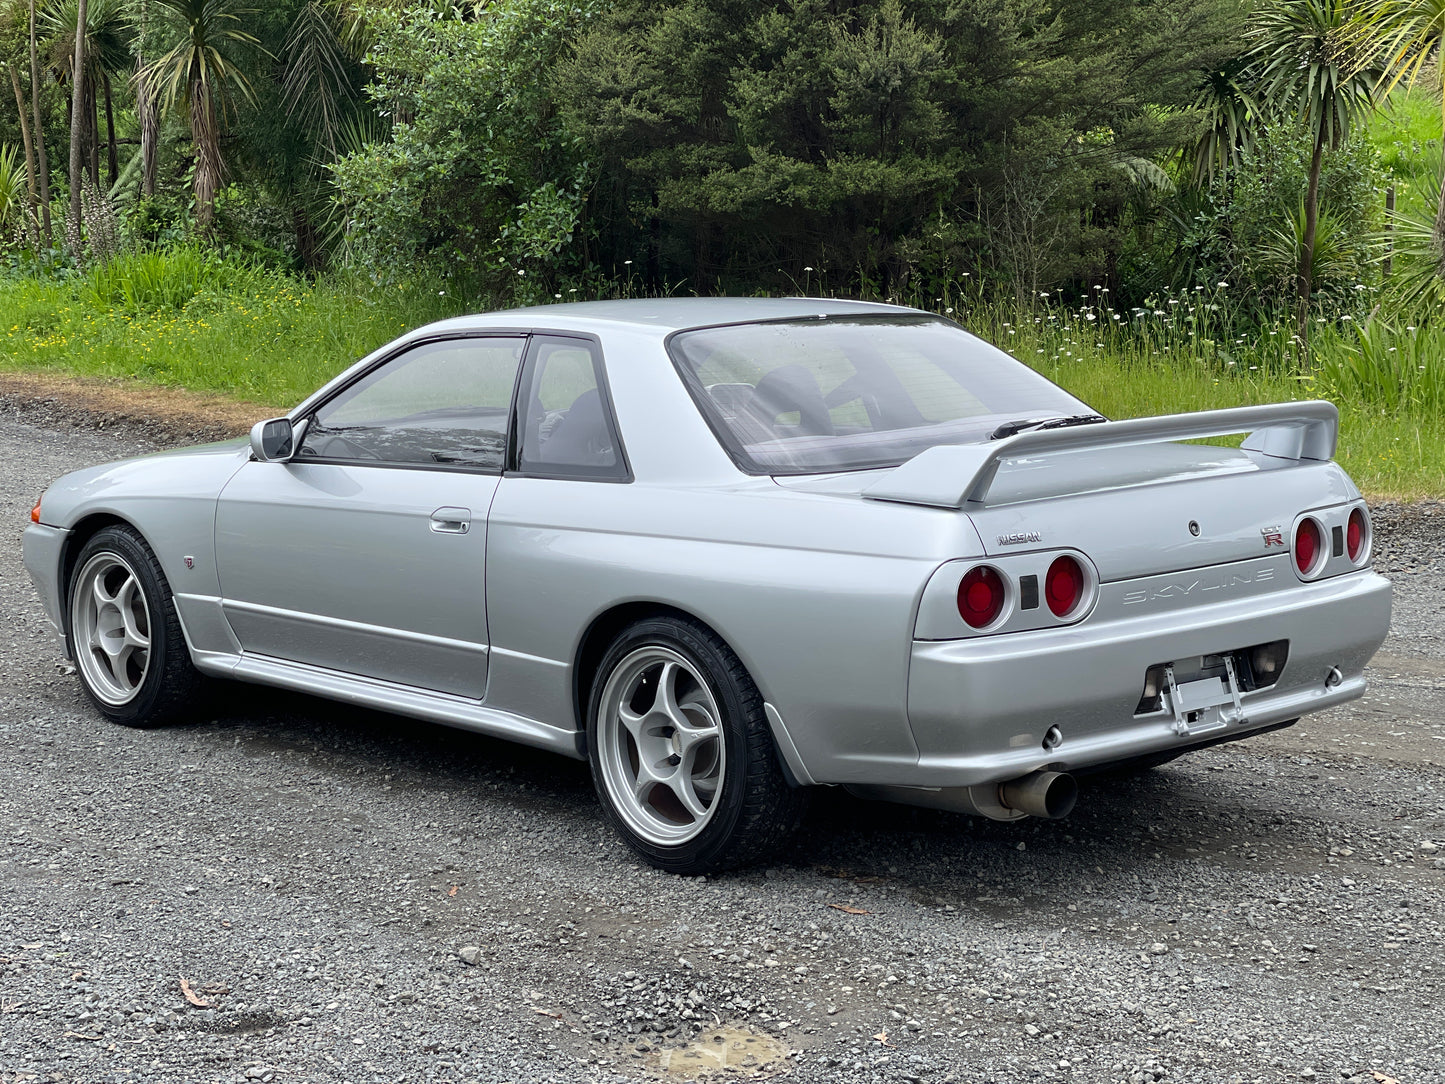 Nissan Skyline R32 GTR - 1994